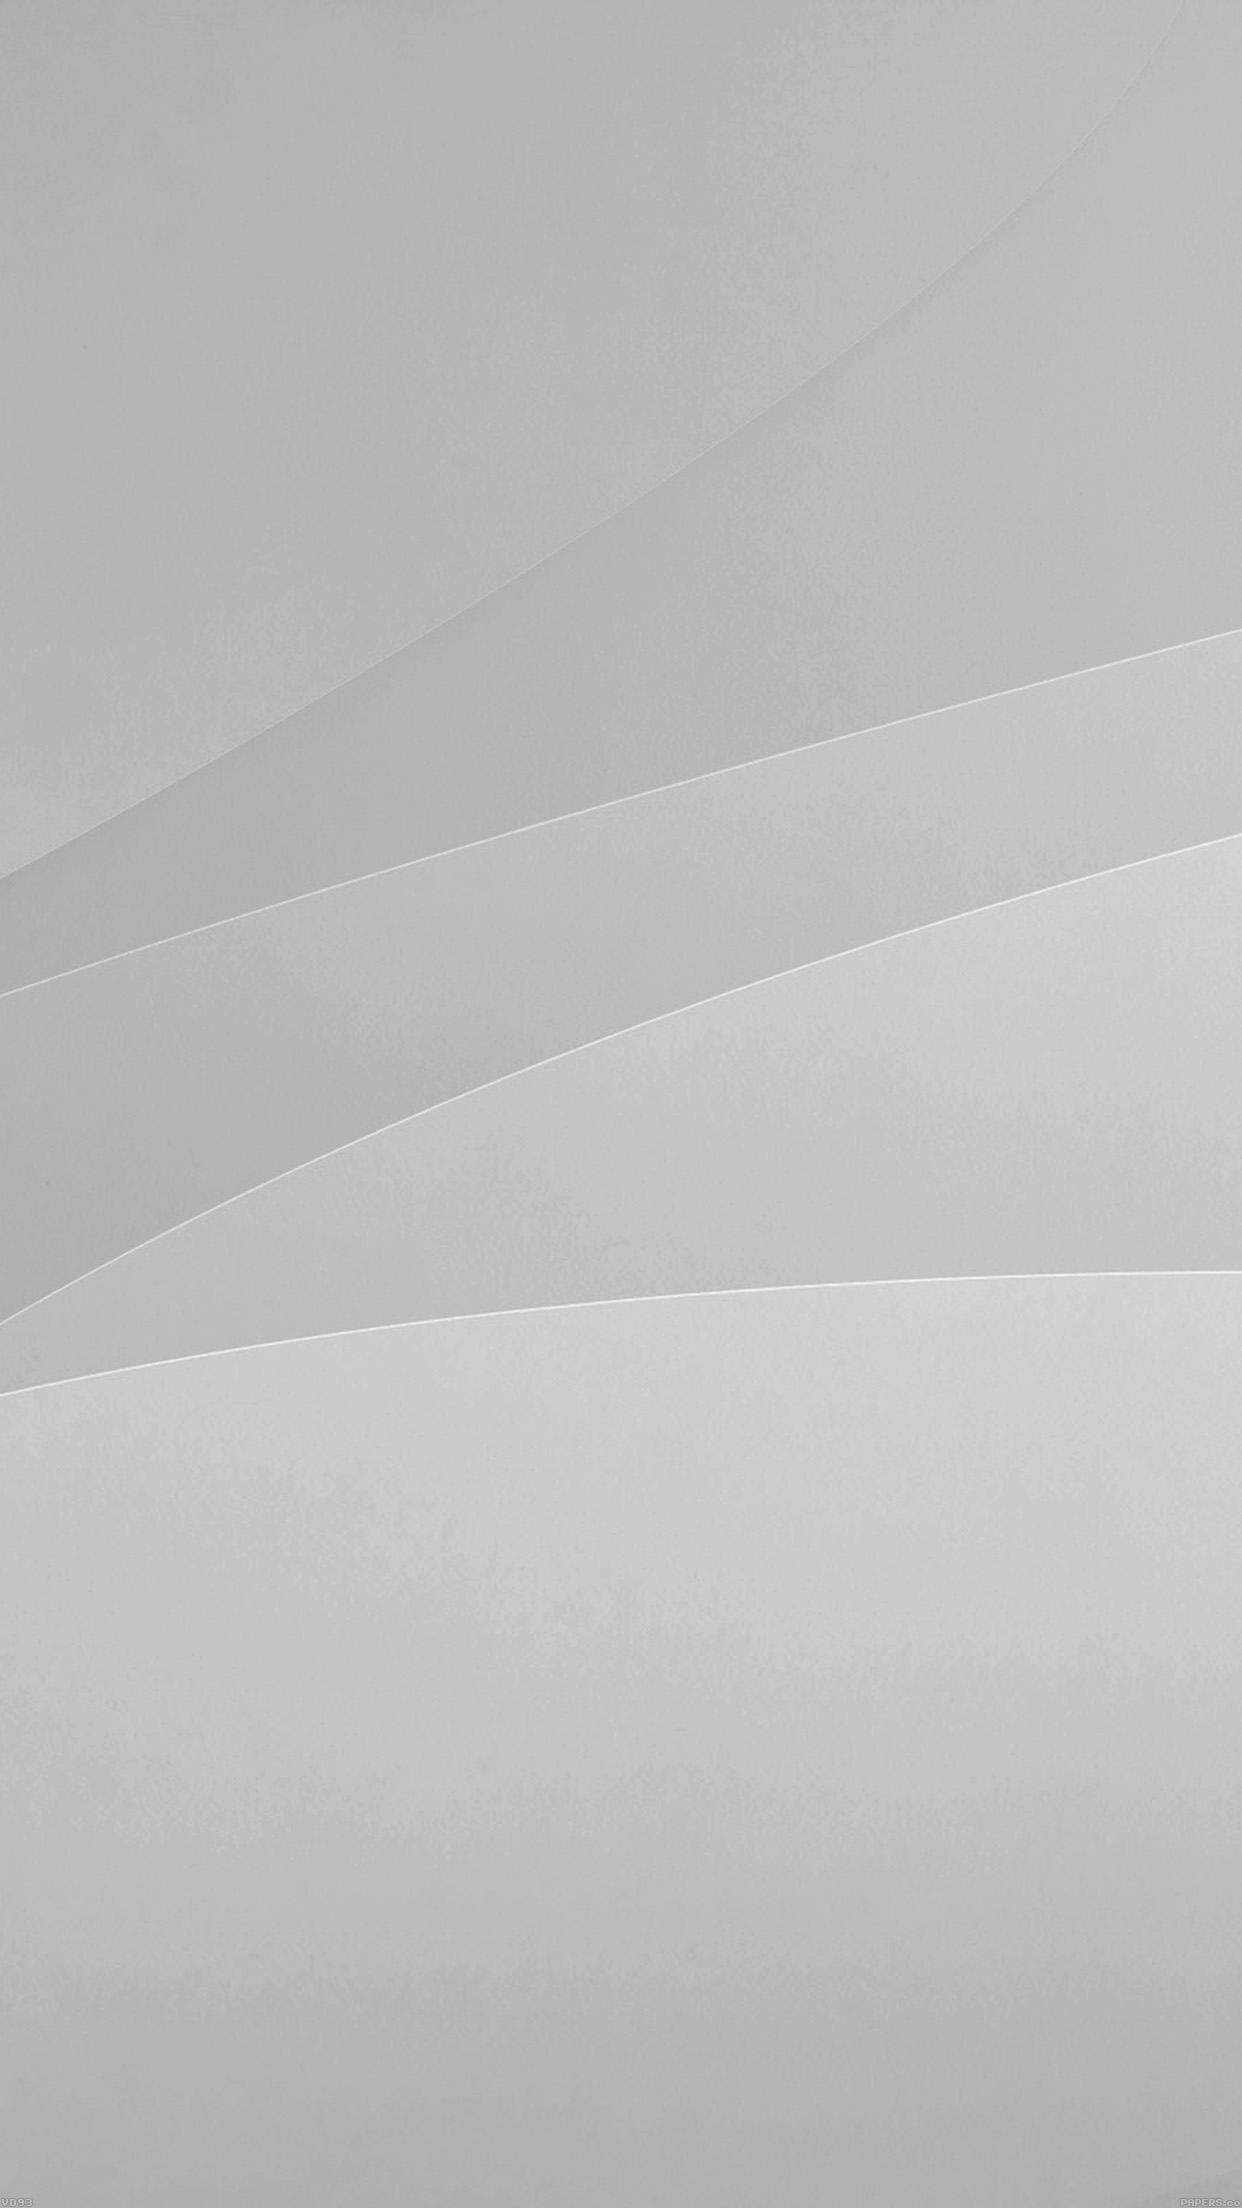 Shining Aqua White Abstract Art Pattern Android wallpaper